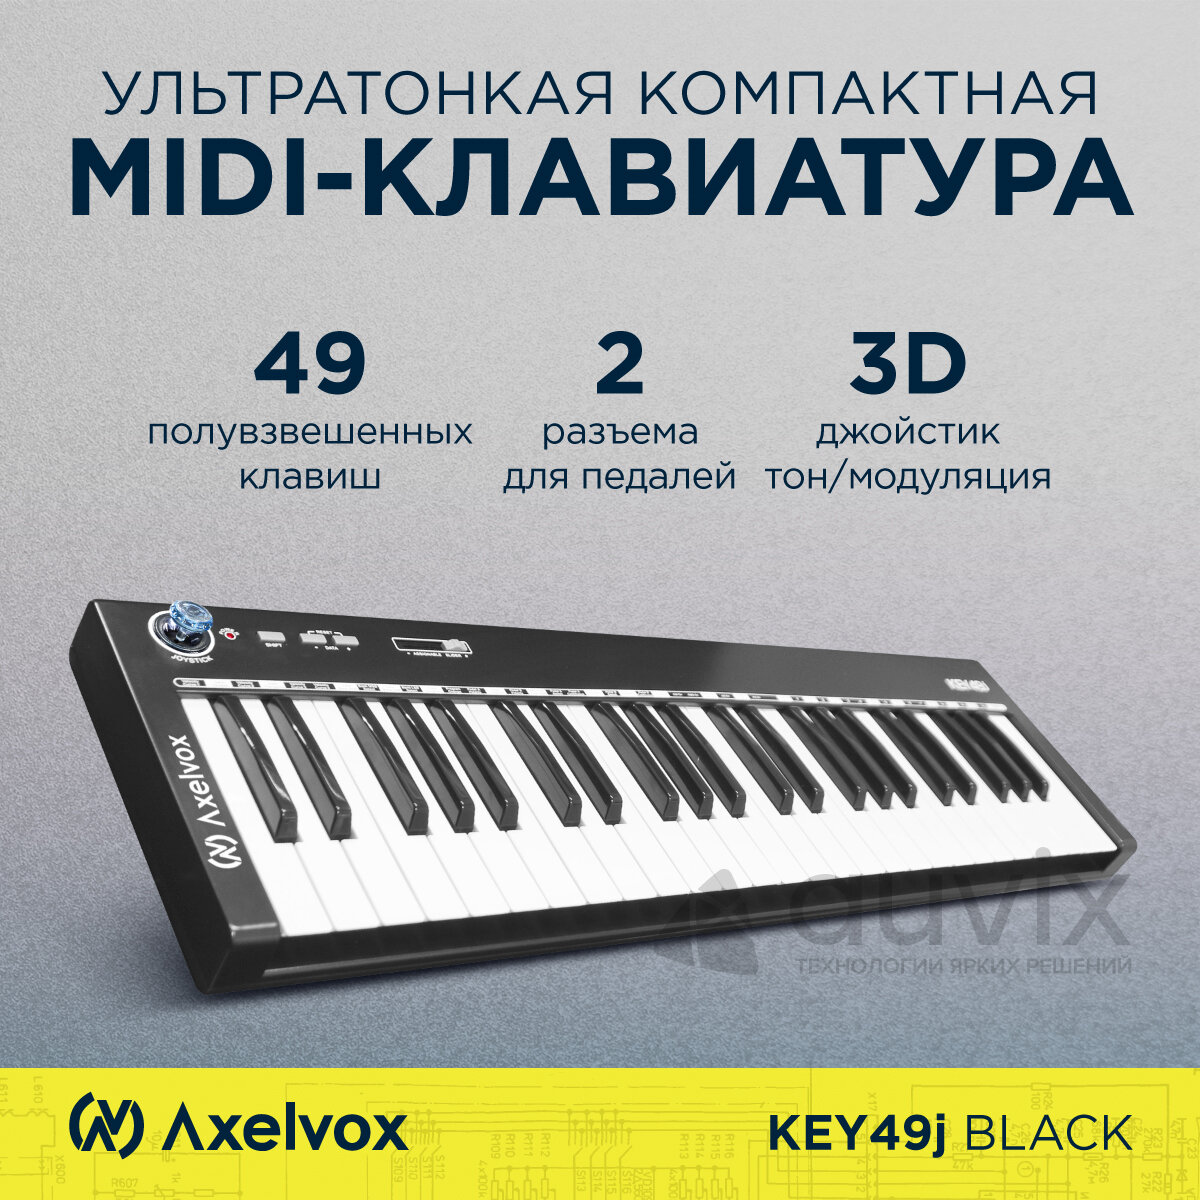 MIDI-клавиатура 49 клавиш, USB, с совместим с Windows XP / Vista и Mac OS X (AX-1973K) KEY49j Black